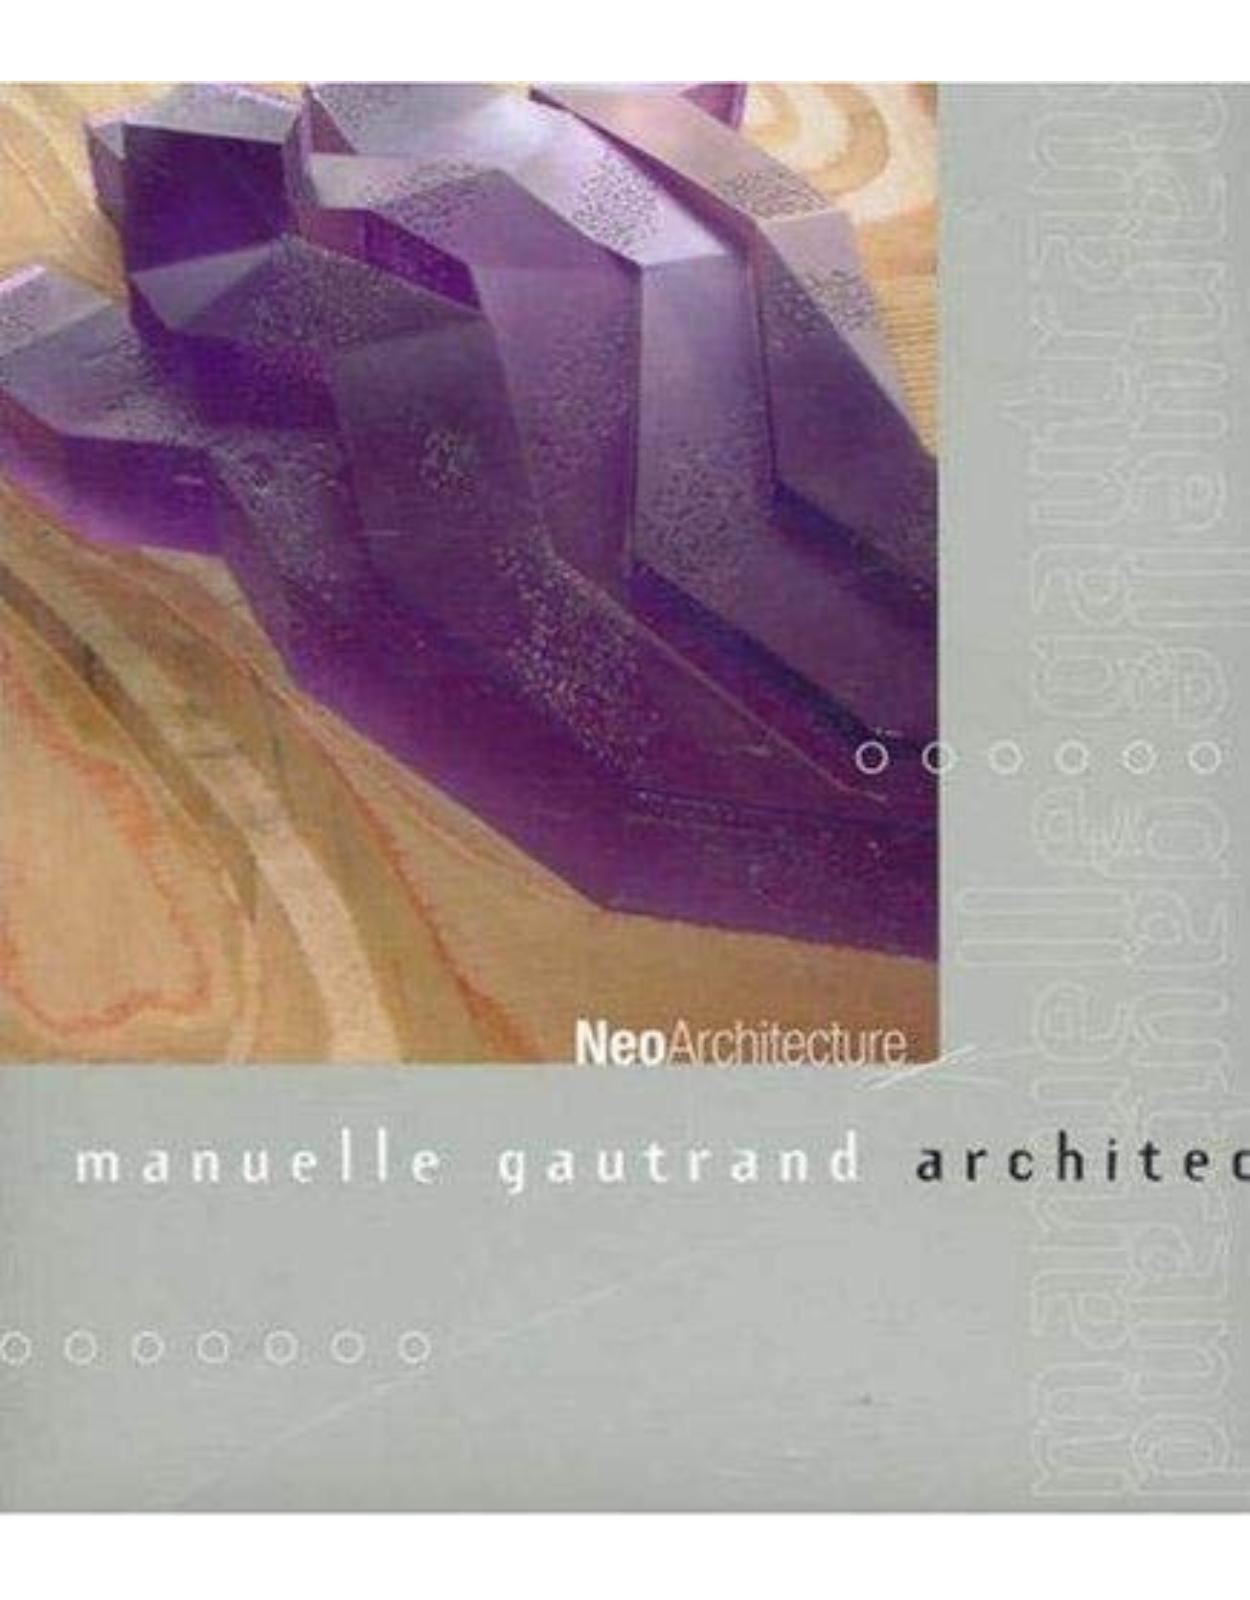 Manuelle Gautrand Architect